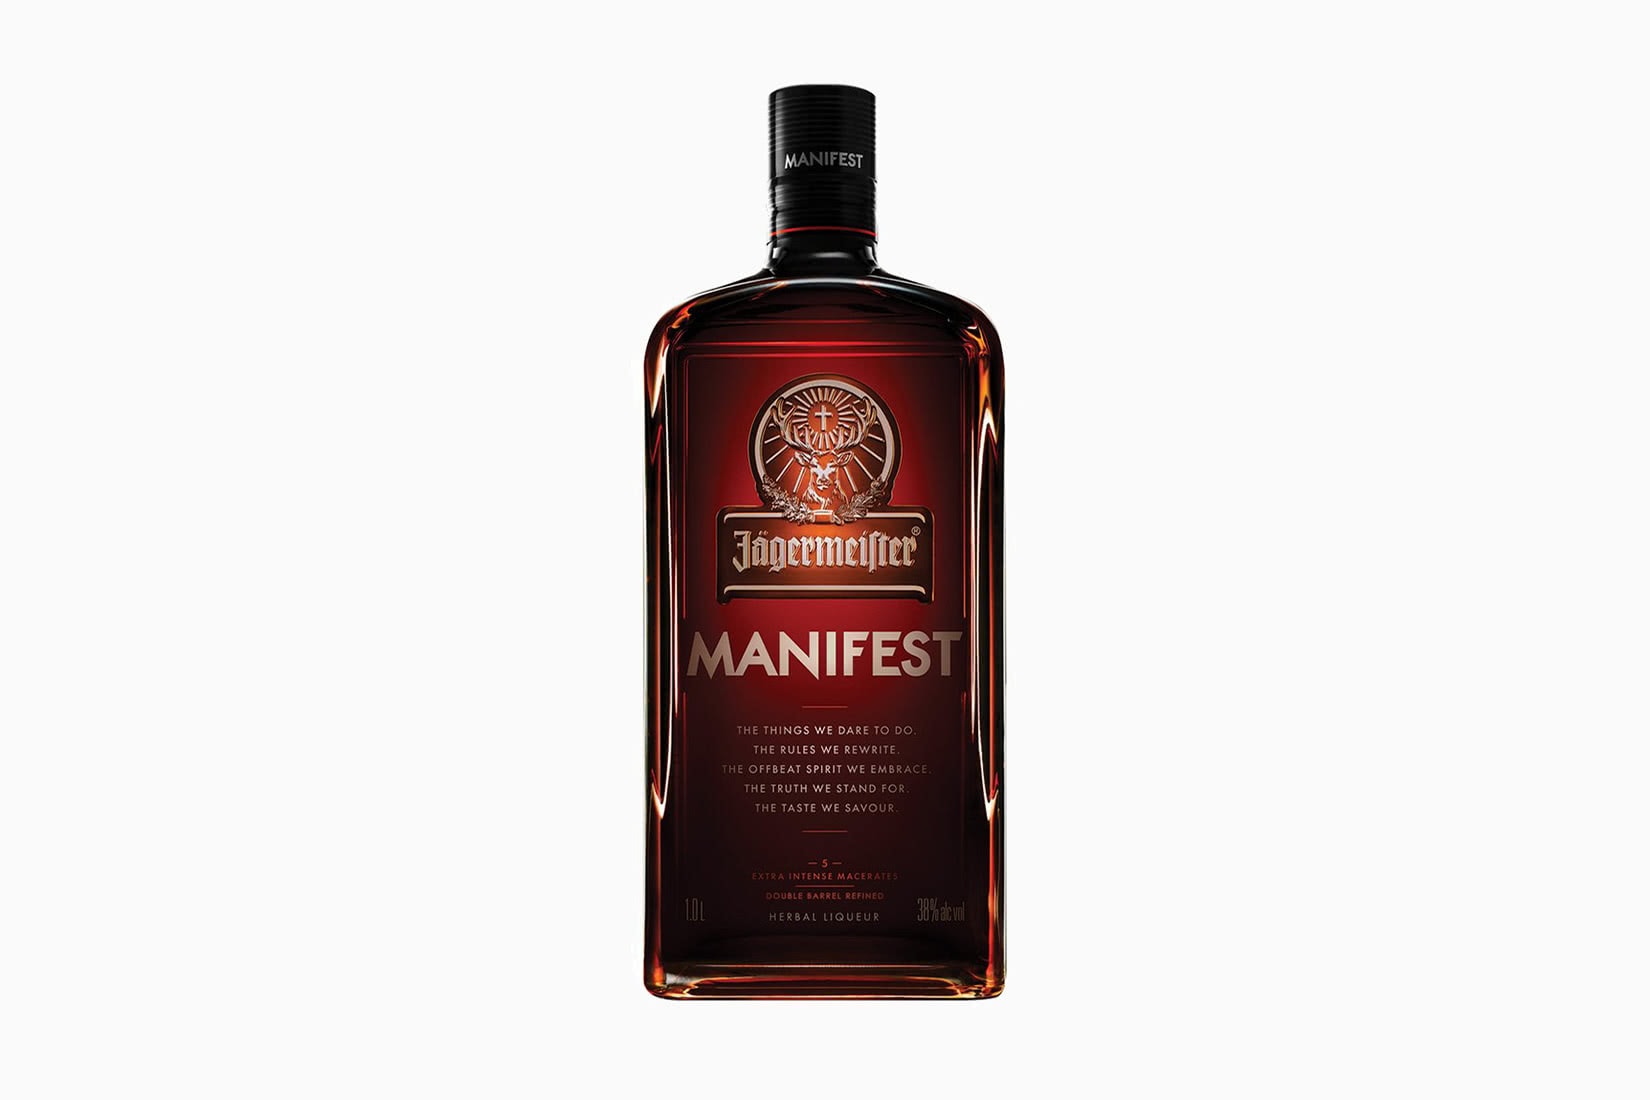 Jägermeister manifest taste bottle price size review - Luxe Digital